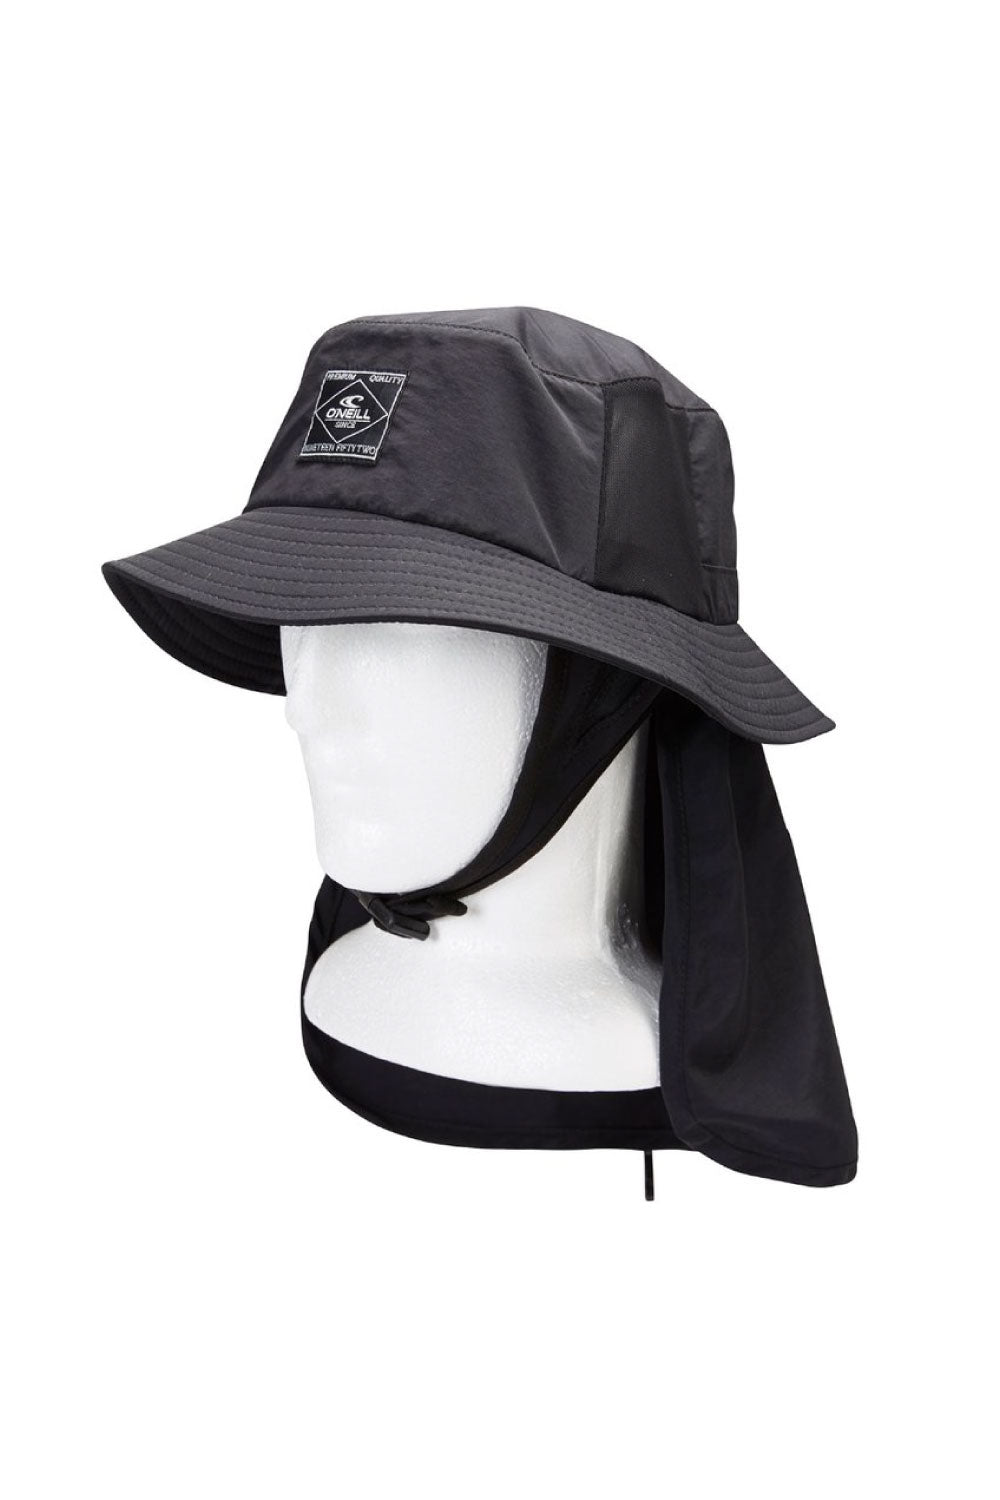 O'Neill Eclipse Bucket Hat 3.0 Black